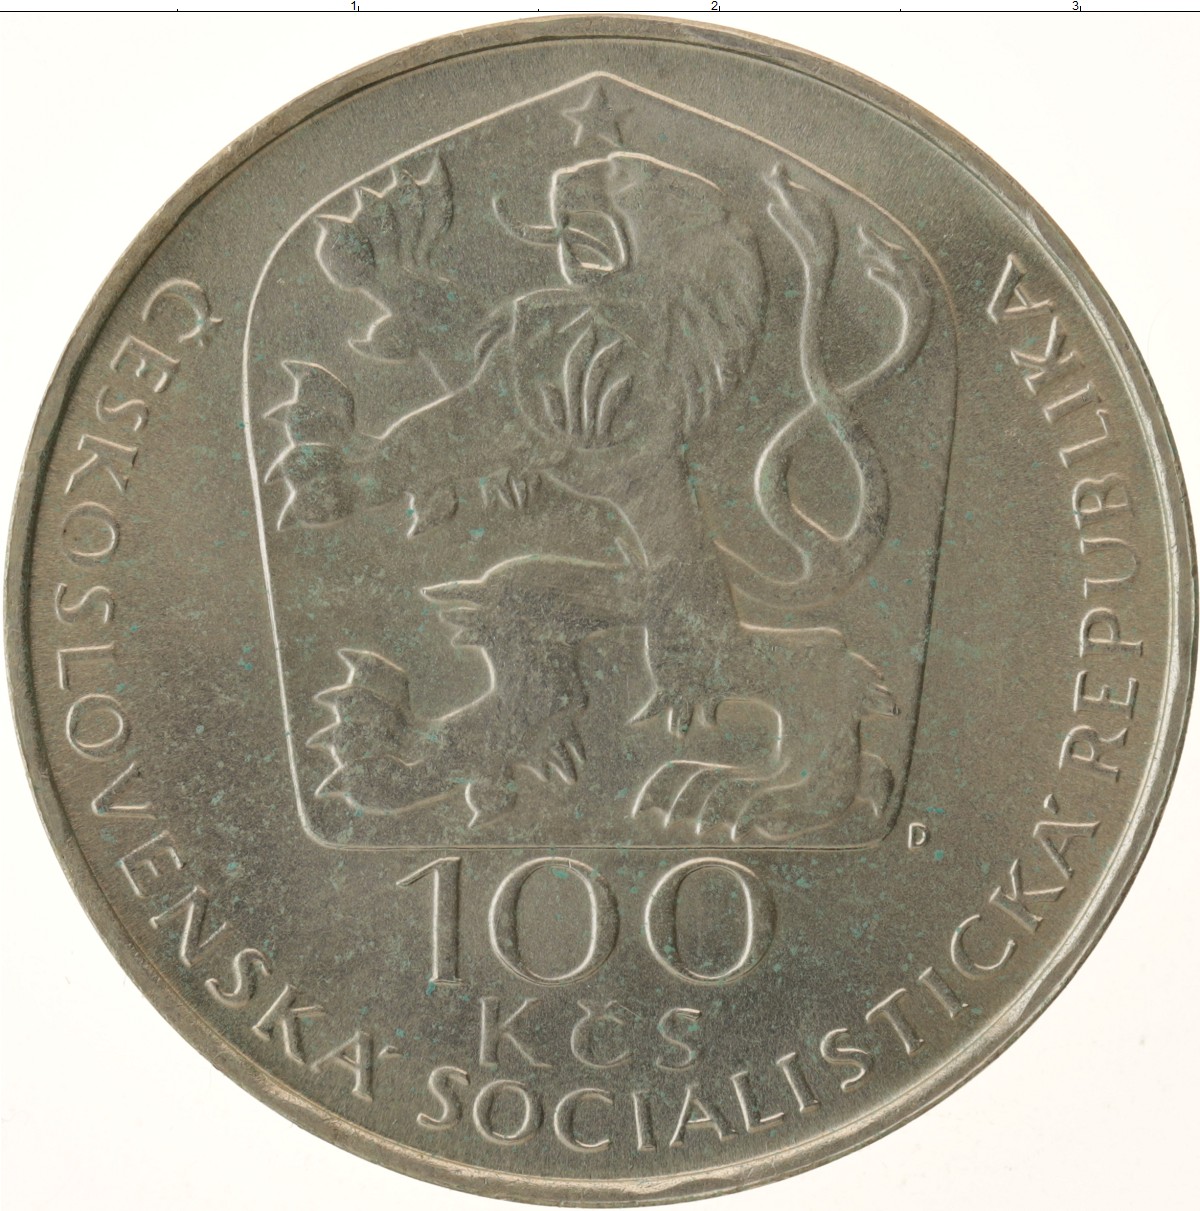 100 крон чехословакия. 10 Чехословацких крон 1977. Монета 100 рублей 1977 года. Чешские монеты 1977 1. 100 Крон платина.